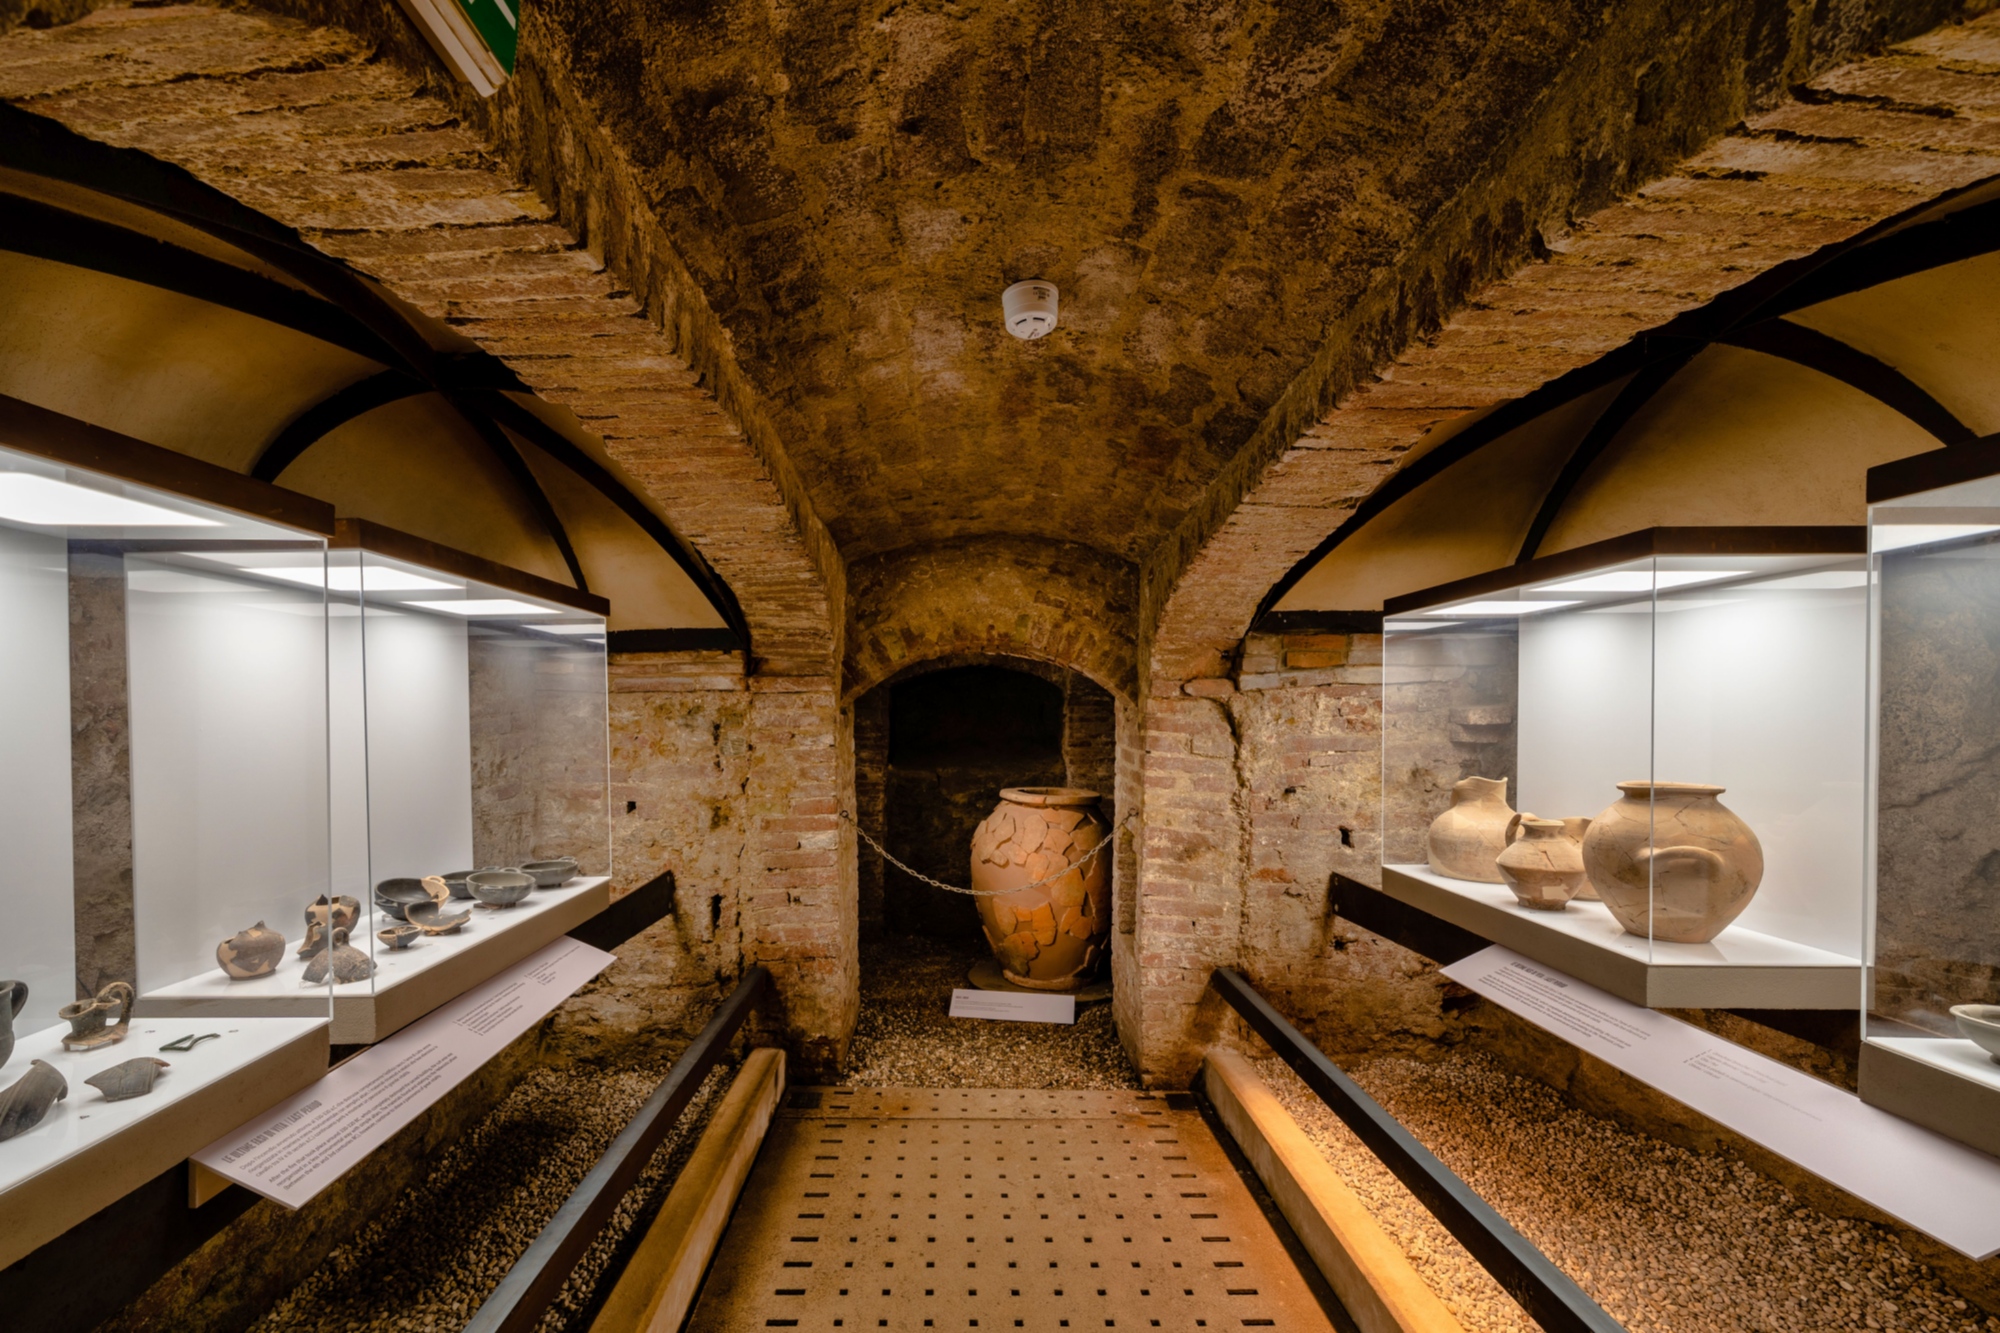 The Archaeological Museum in Peccioli